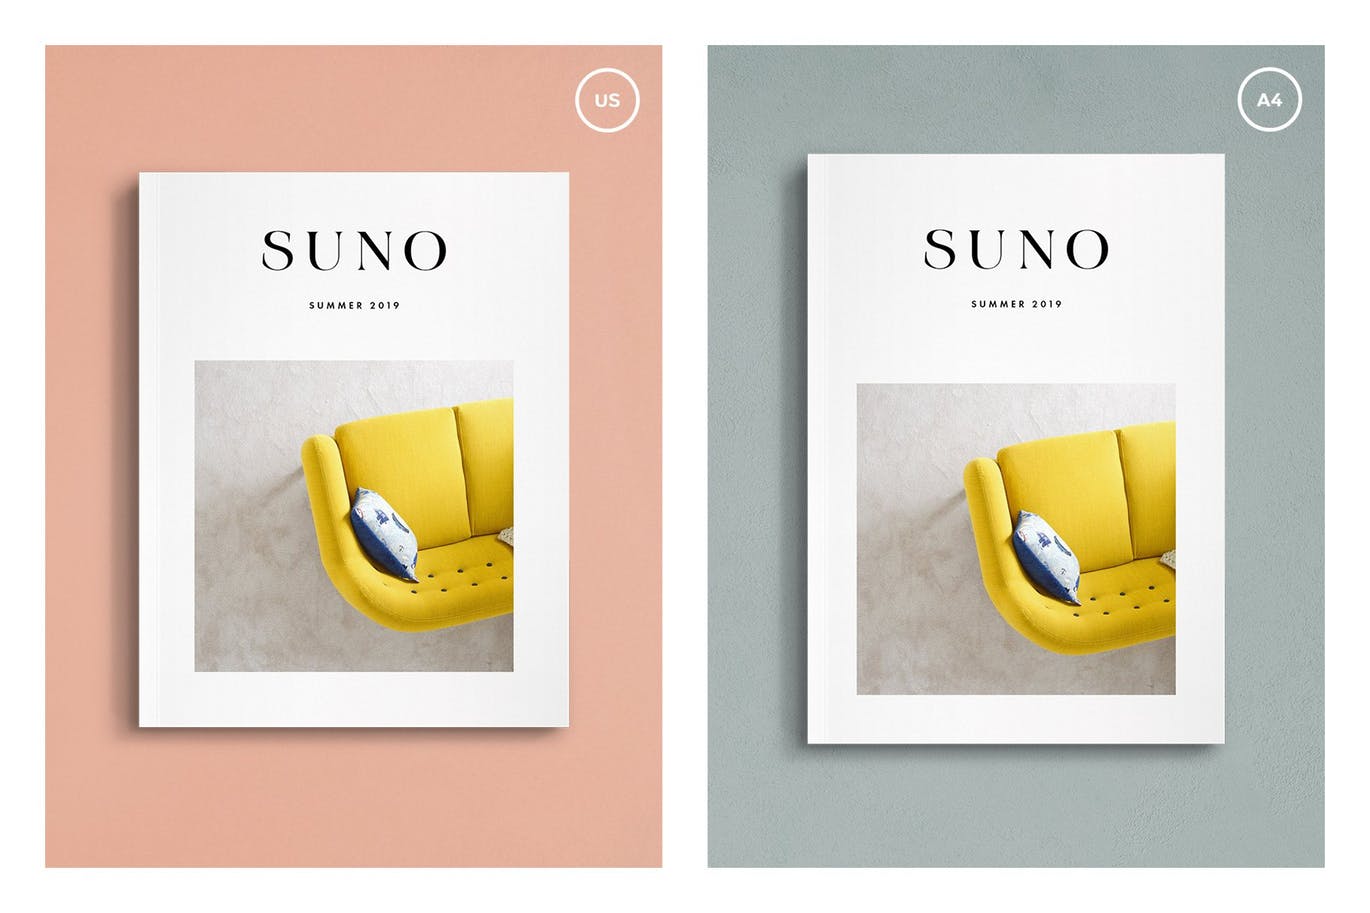 北欧简约时尚风格杂志设计效果图样机 Suno Magazine Mockup Kit插图(6)